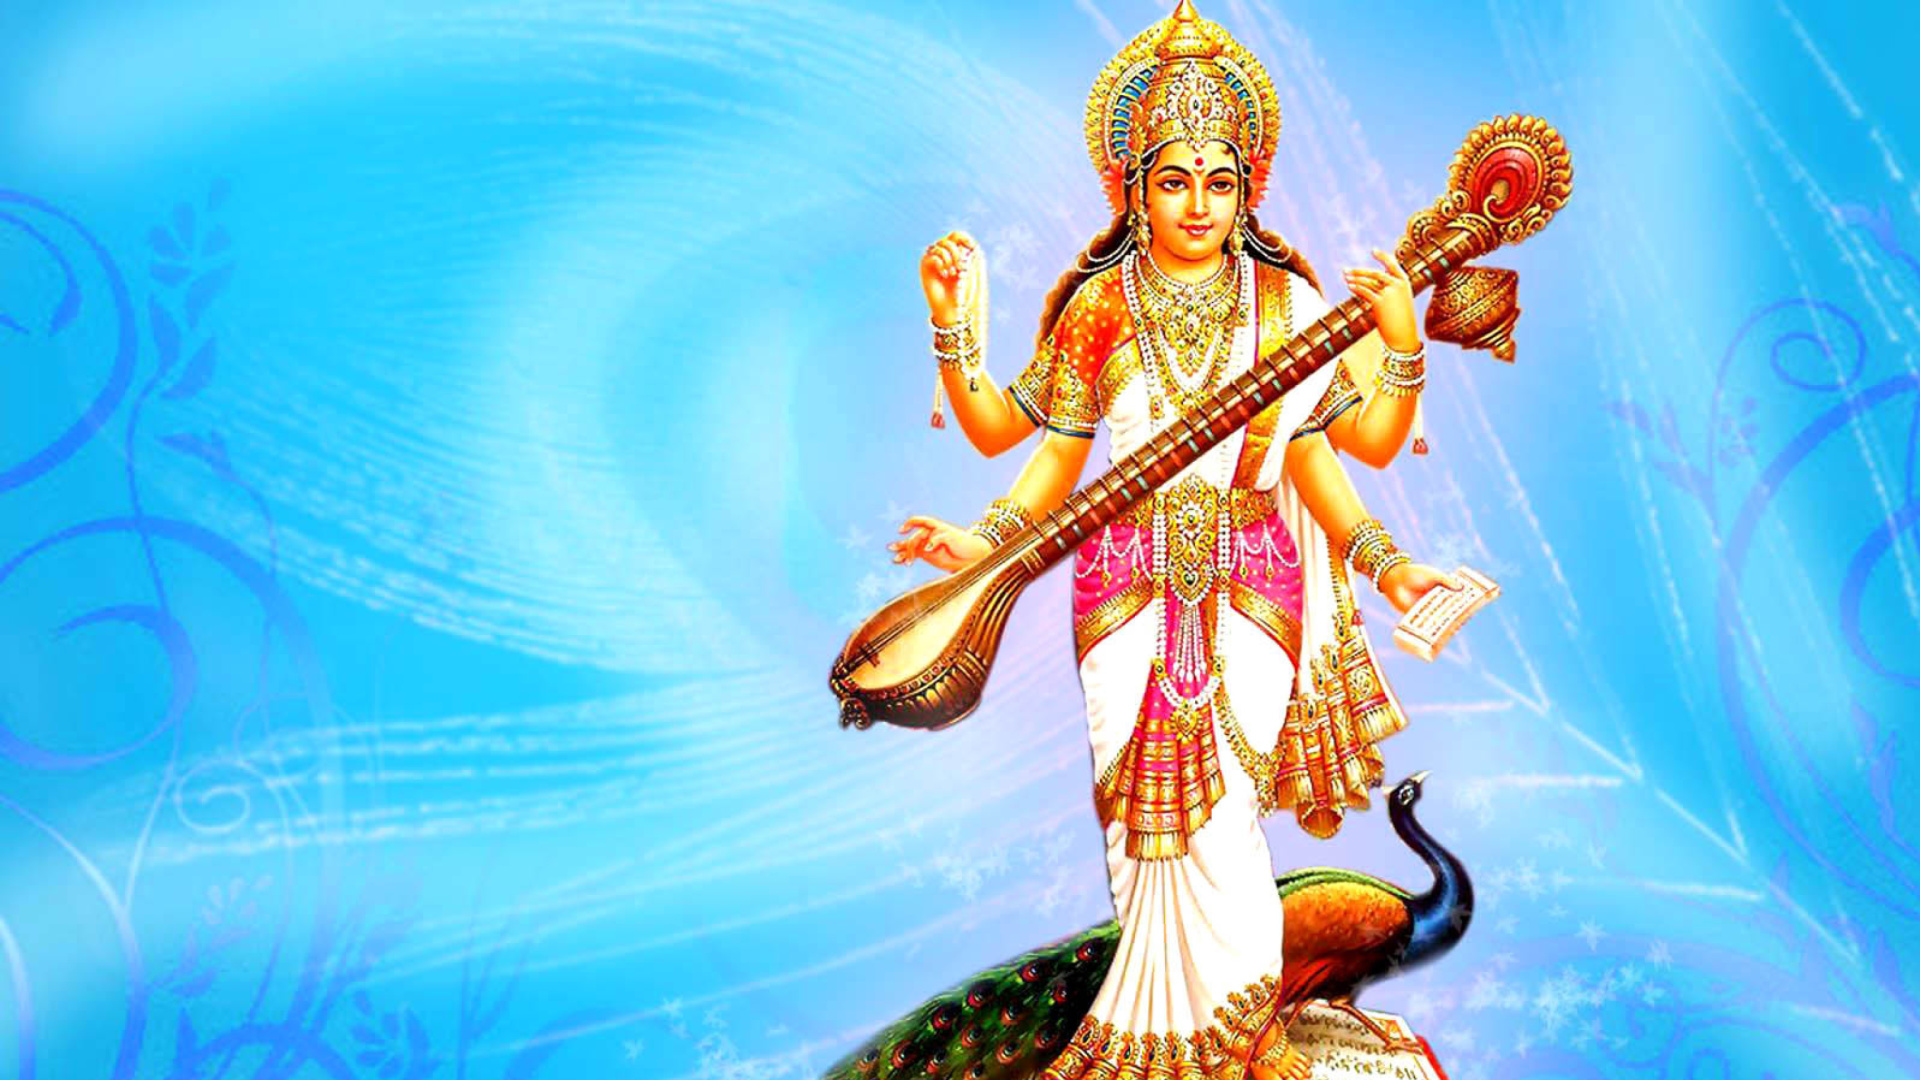 Saraswati Hindu Goddess Wallpaper for Desktop 1920x1080 Full HD